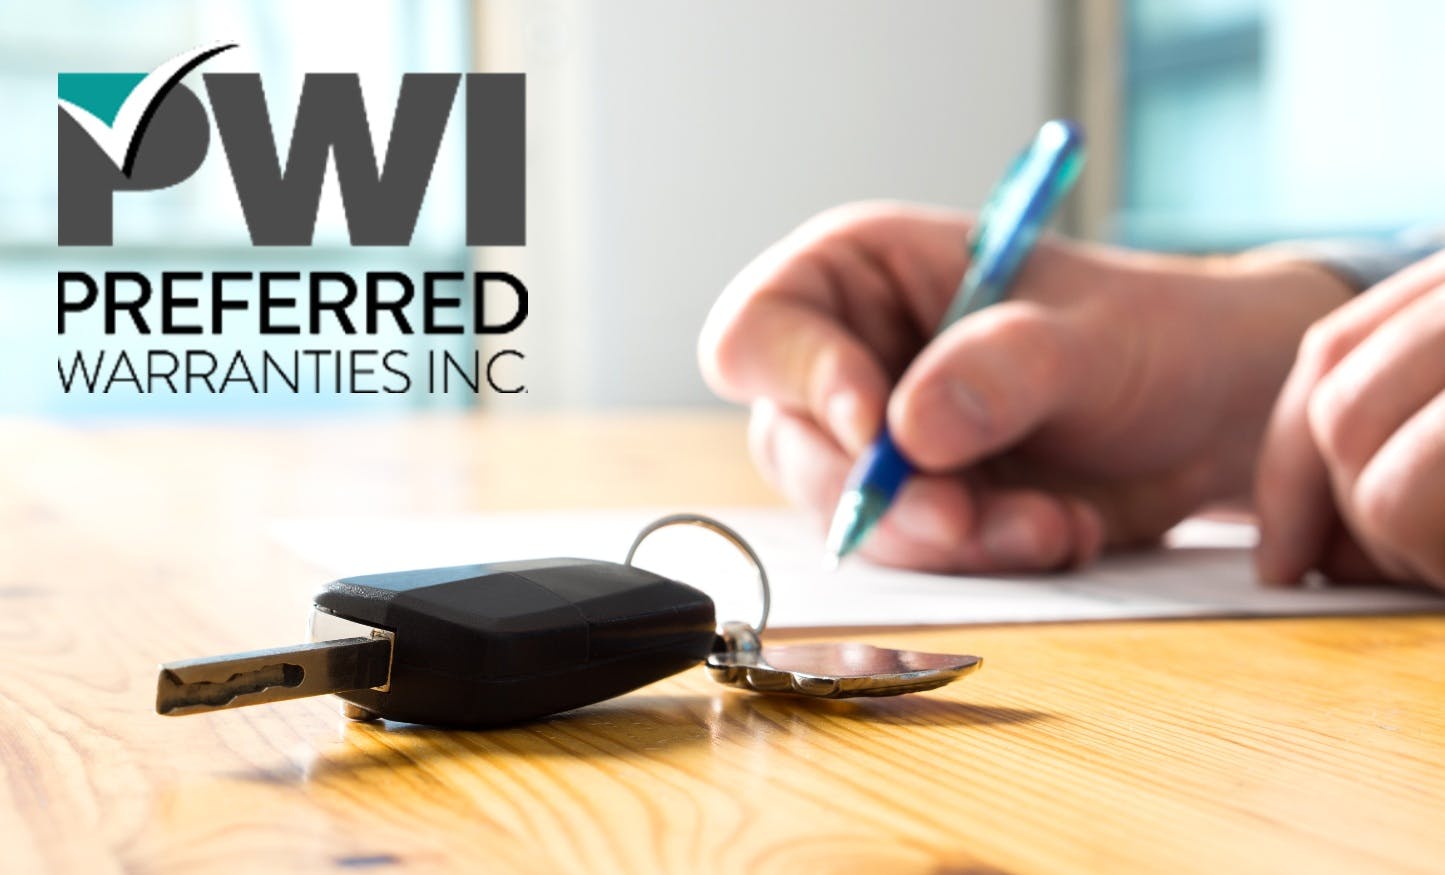 Is Preferred Warranties Inc. Your Ideal Warranty Provider?